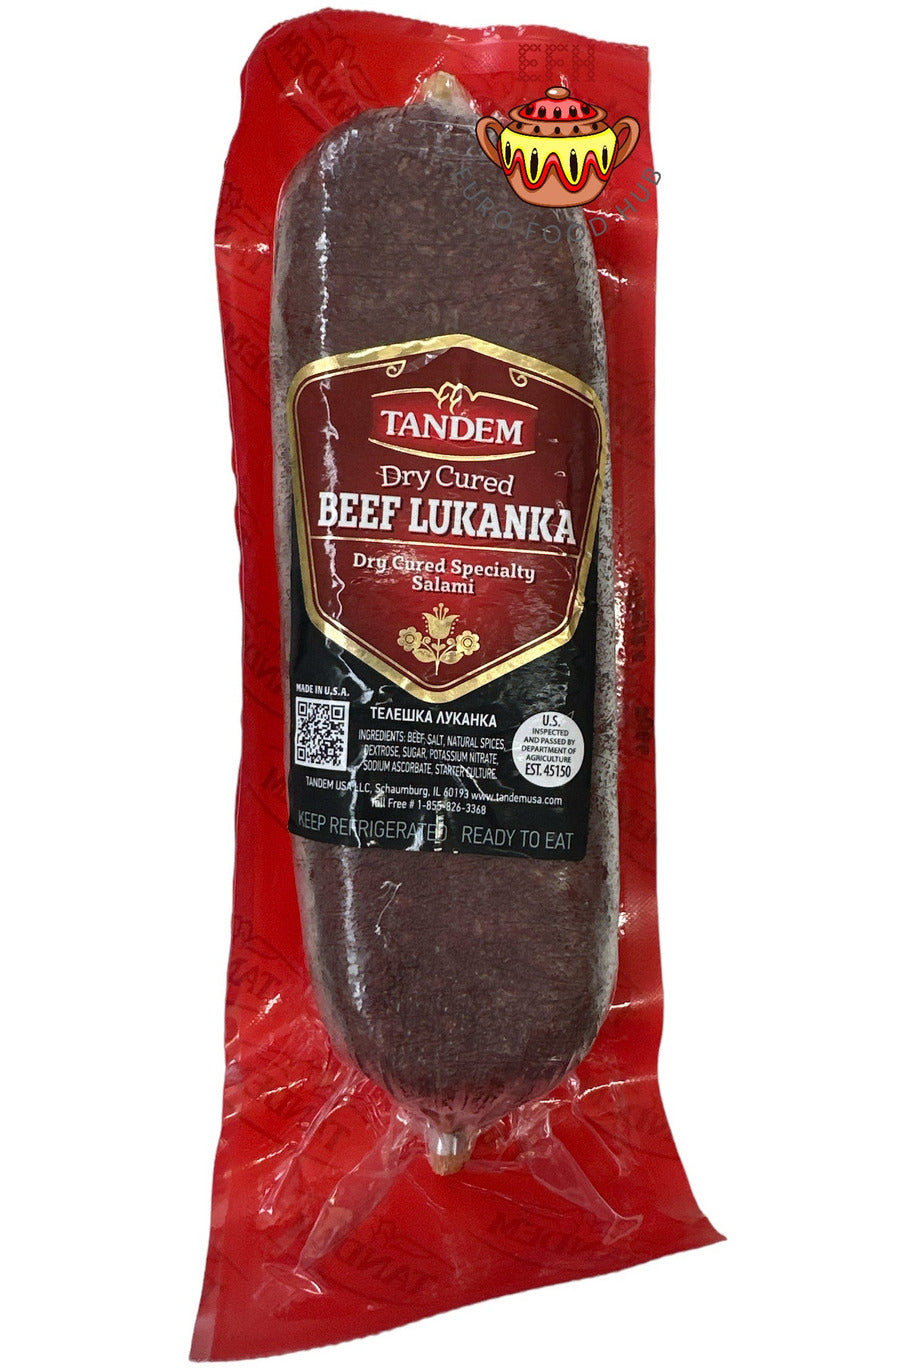 BEEF LUKANKA - Tandem - Dry Cured Premium Salami 1.19 lbs